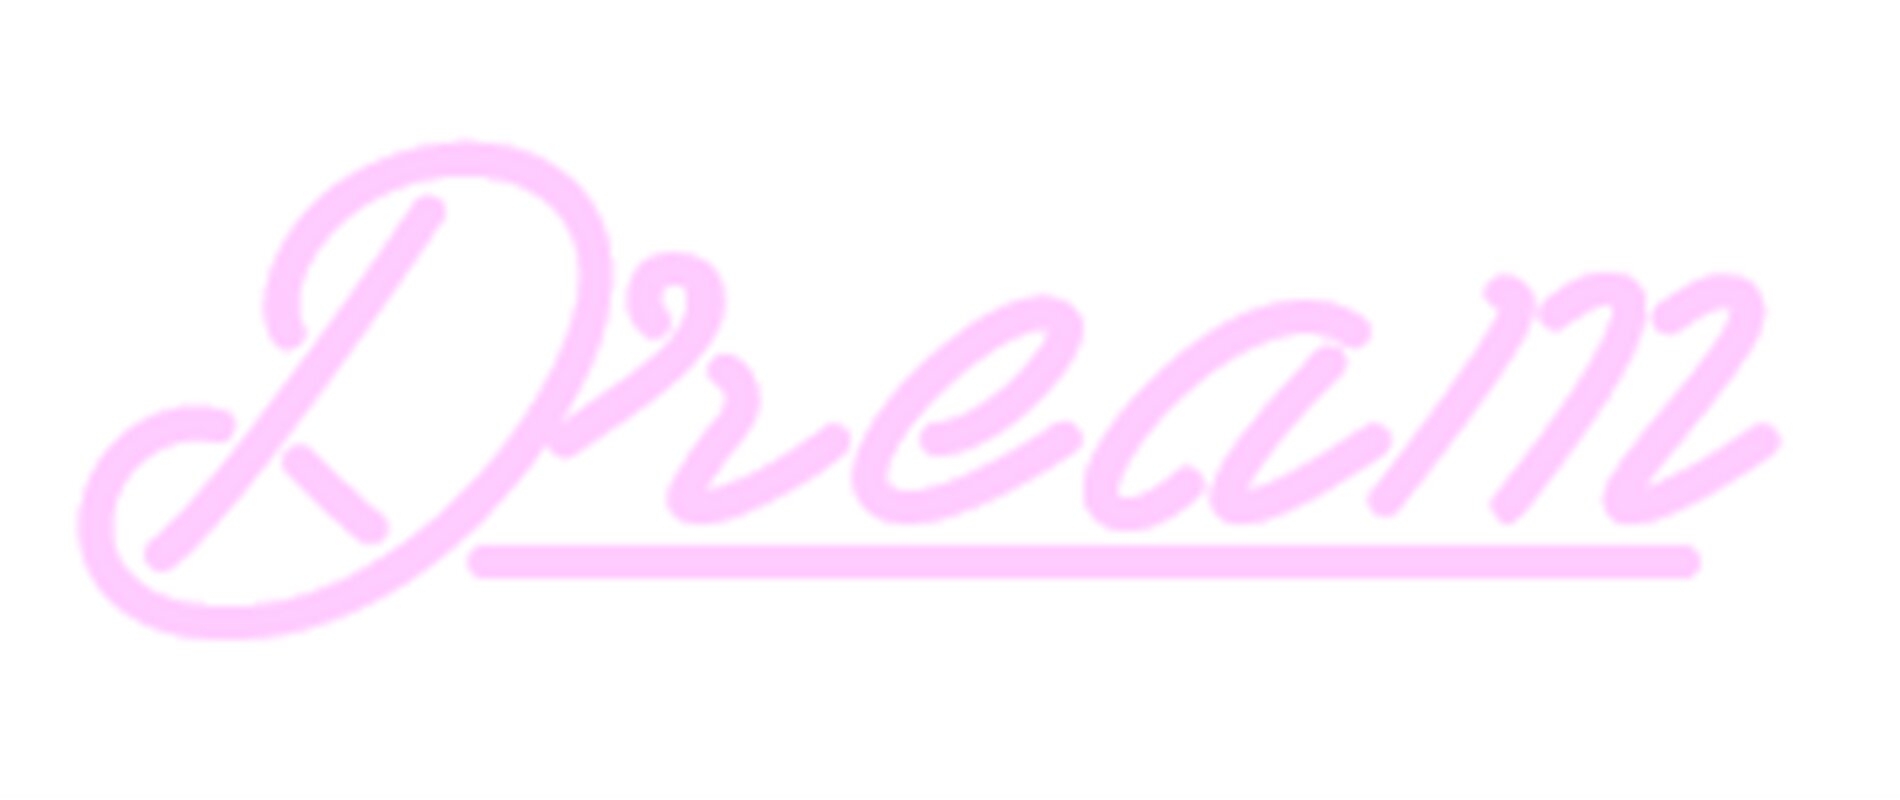 Dream Neon Sign - Image 0